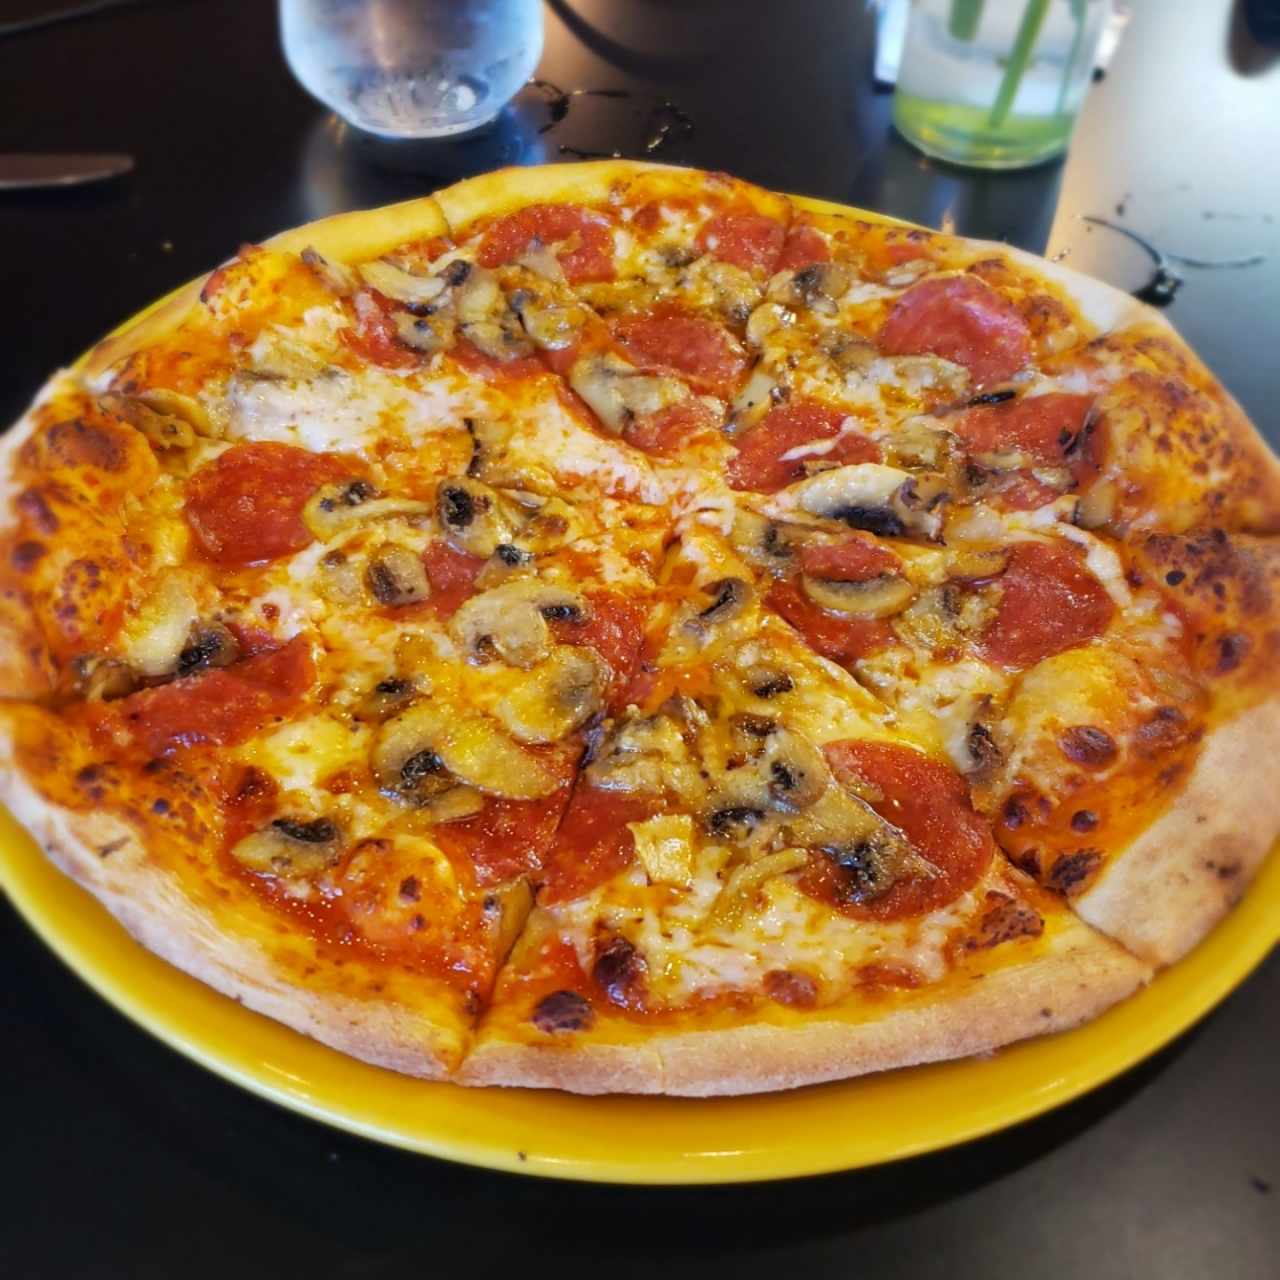 Pizzas - Champiñones al ajillo, extra de peperoni 